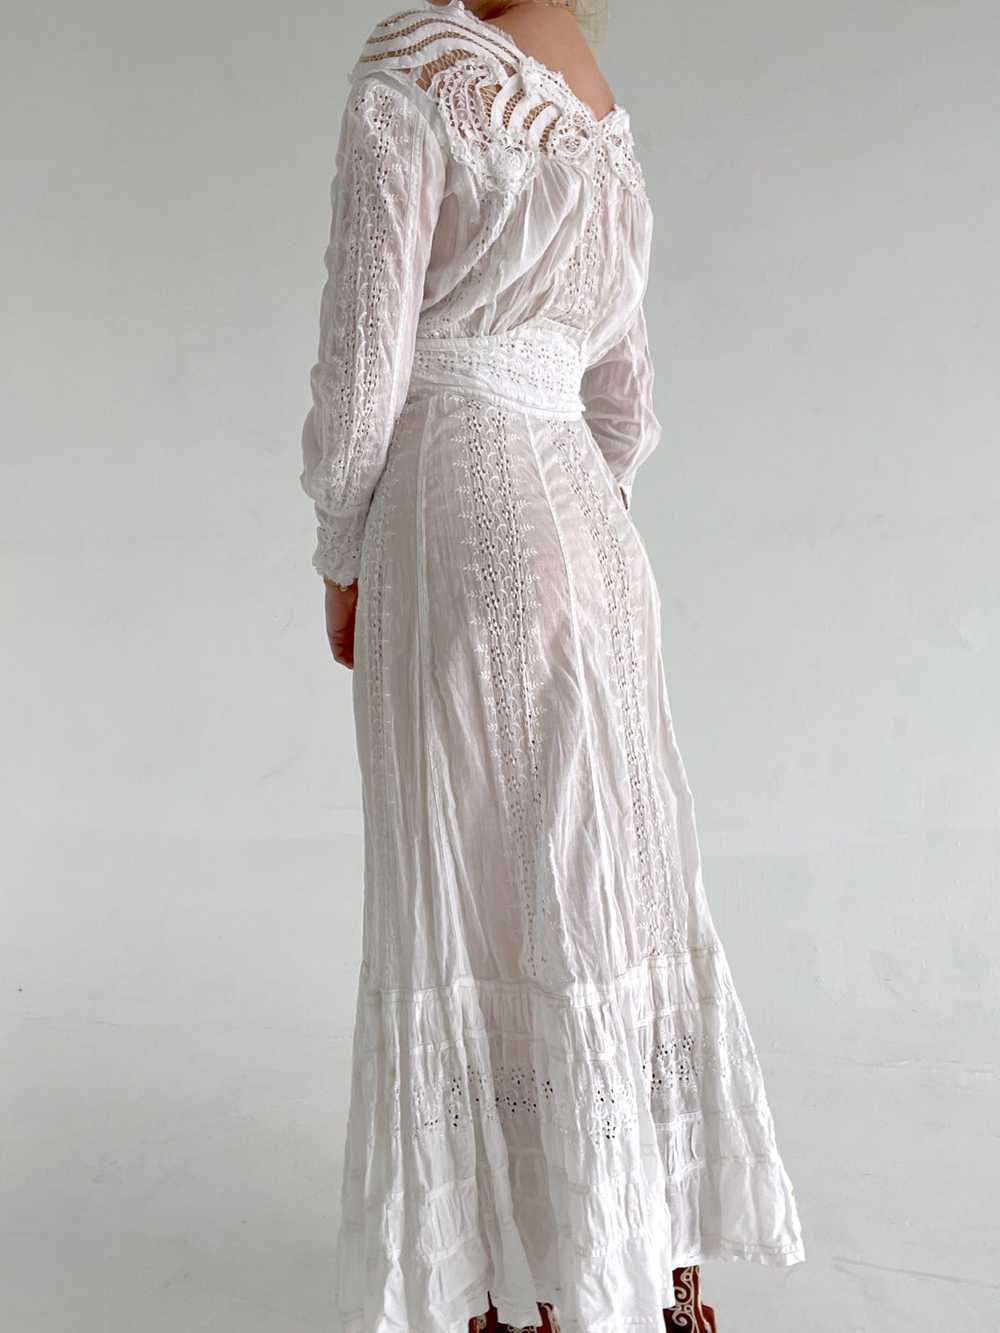 Victorian White Cotton Lawn Dress - image 7